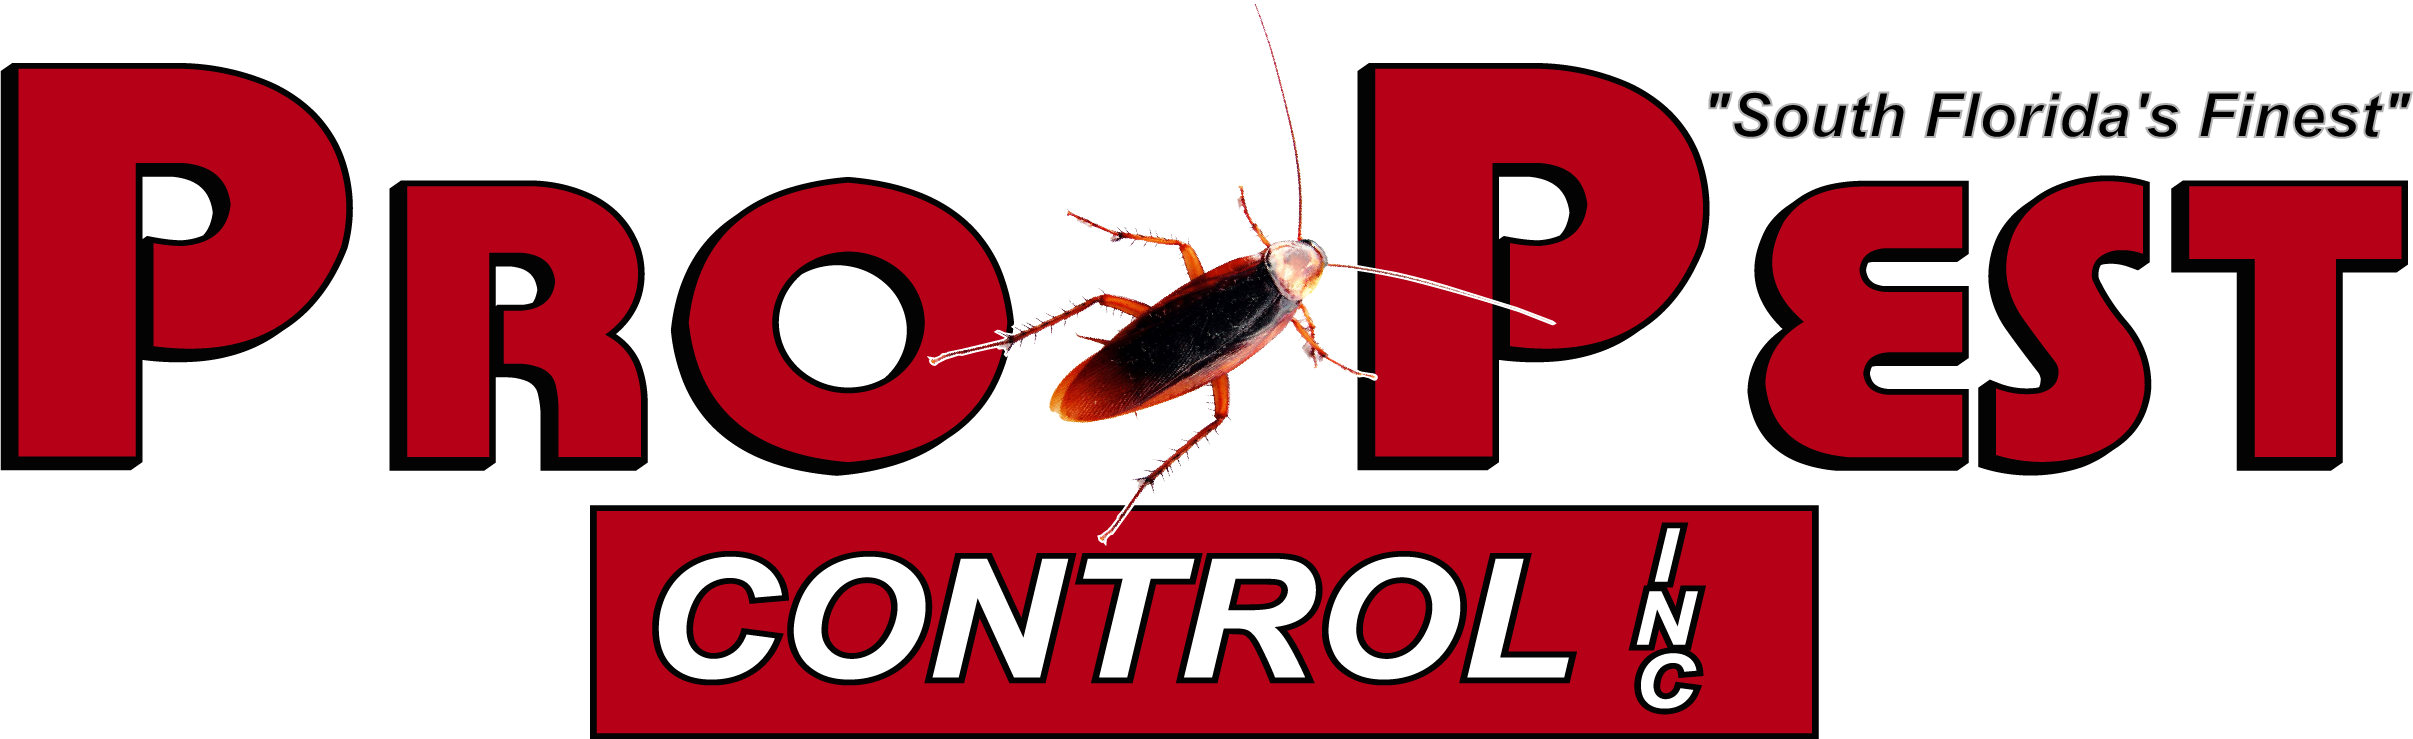 Pro Pest Control, Inc.